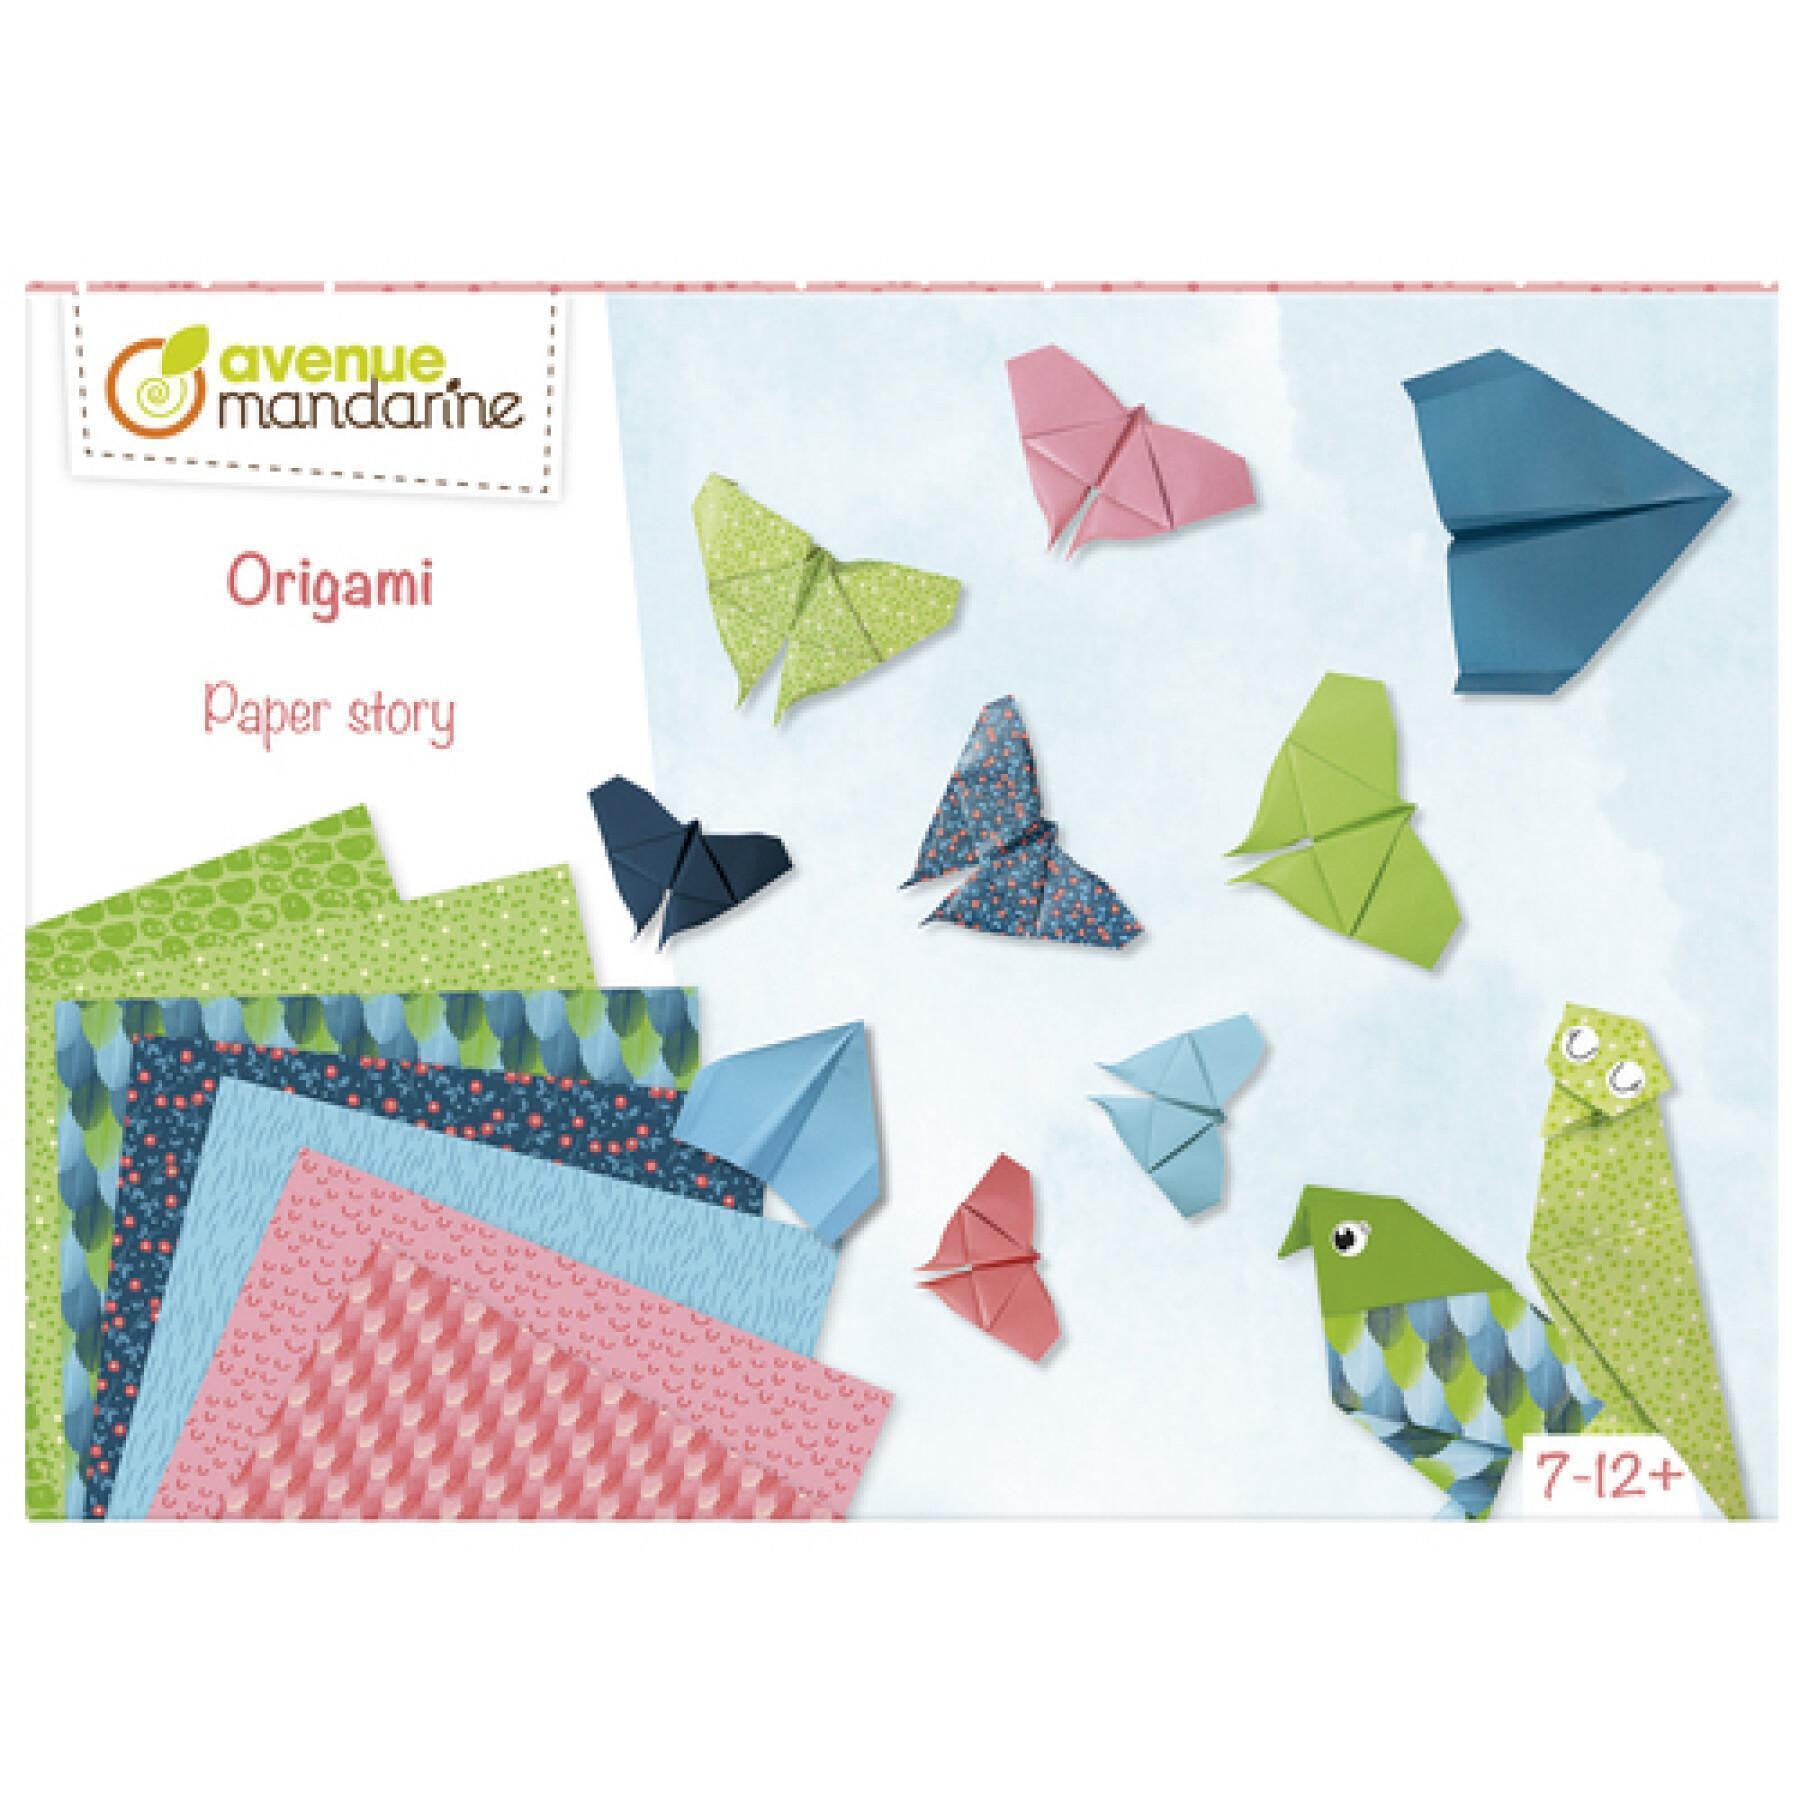 Caixa criativa de origami Avenue Mandarine